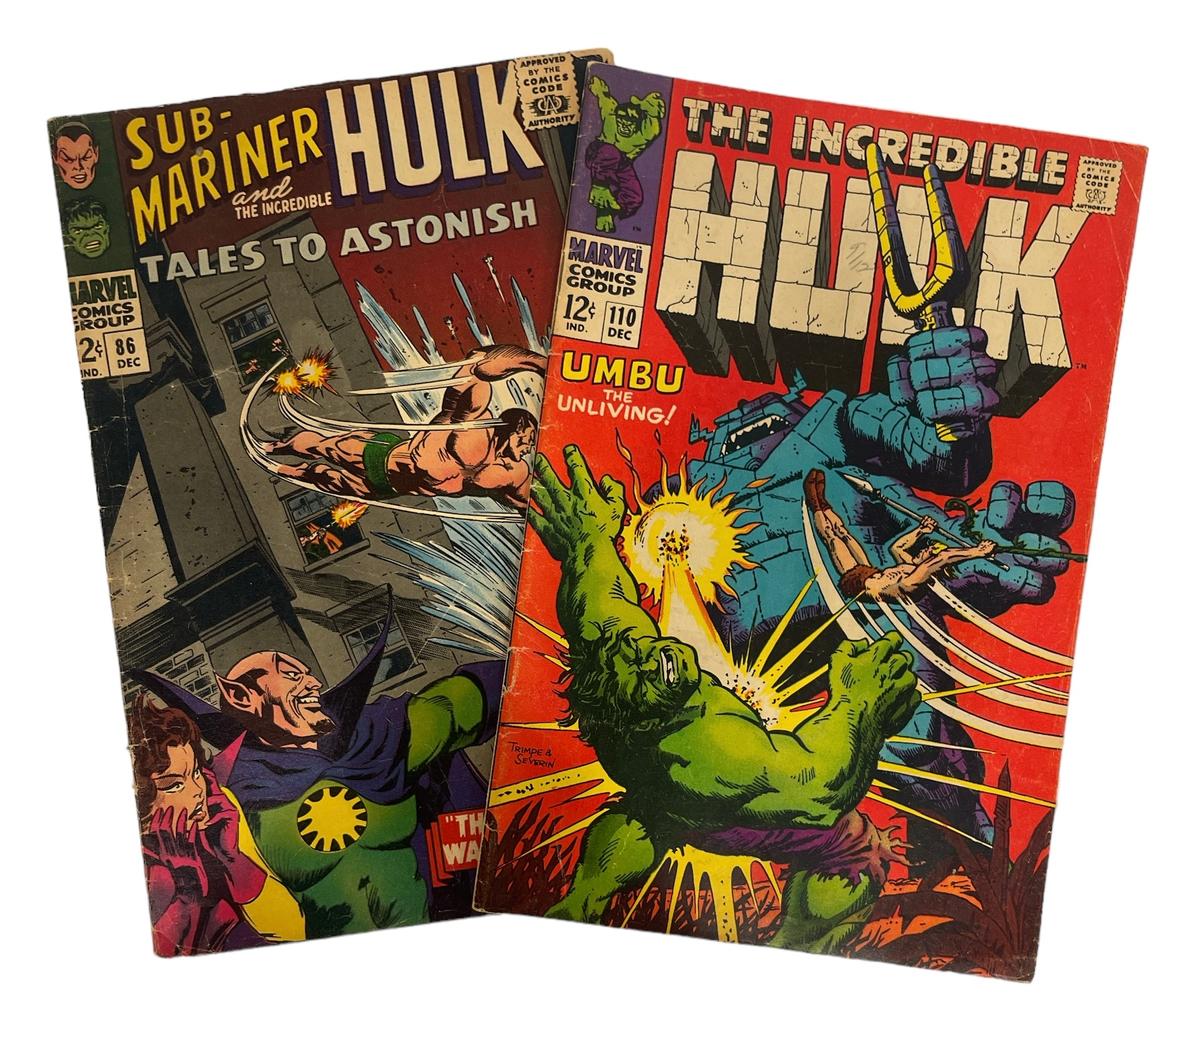 Vintage Marvel Comics - The Incredible Hulk and Sub-Mariner and The Incredible Hulk